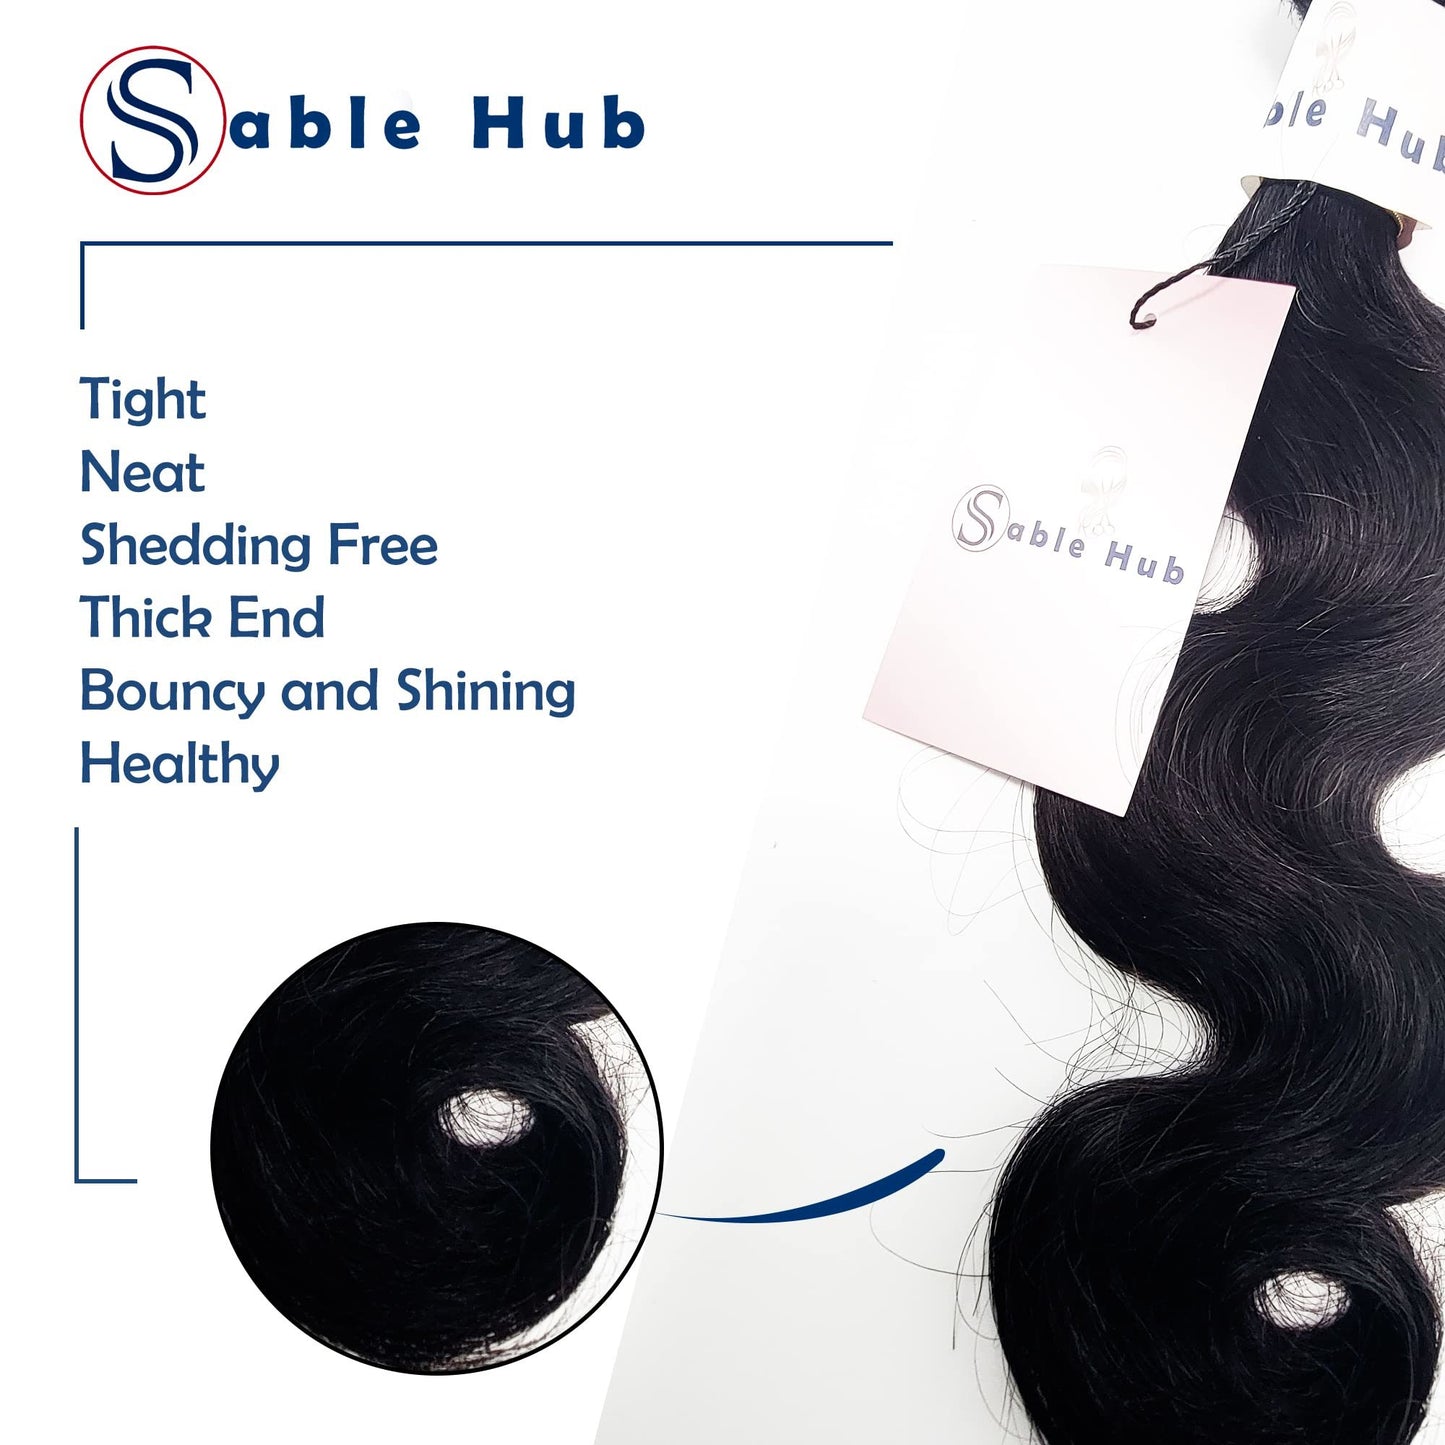 Sable Hub Body Wave Women Hair Bundle | 100% Unprocessed 10A Brazilian Virgin Body Wave Bundle, 150% Density Hair Extension, Natural human Hair